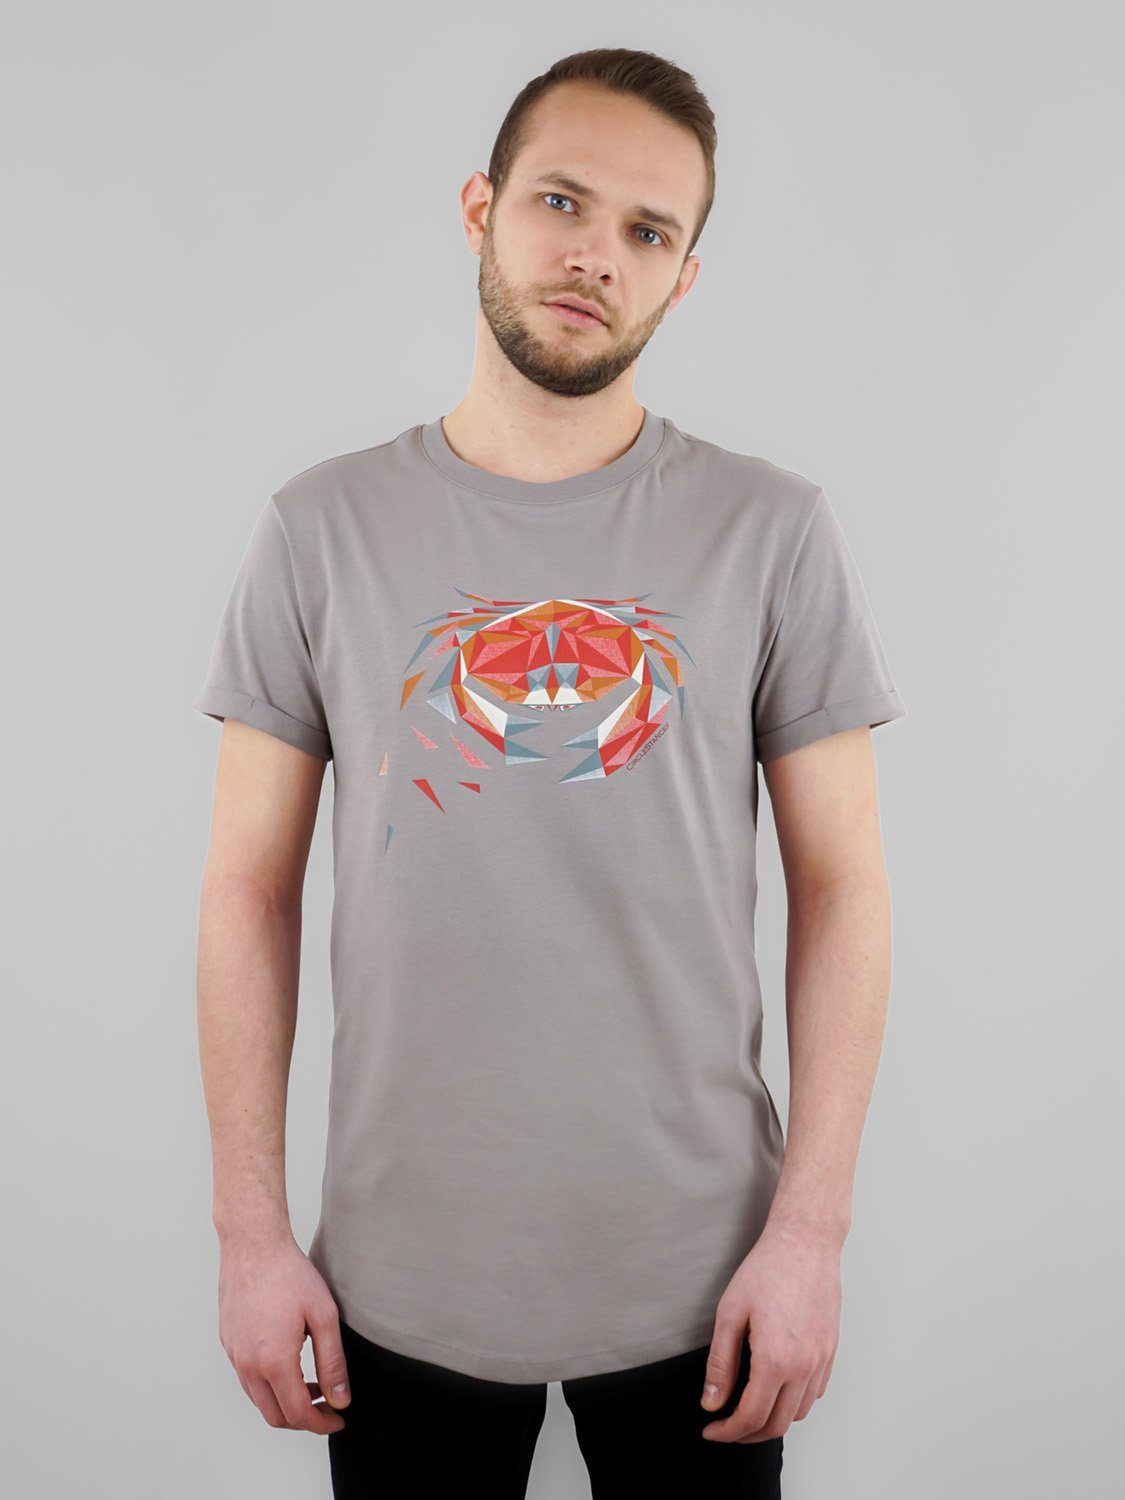 CircleStances Taschenkrebs Print-Shirt